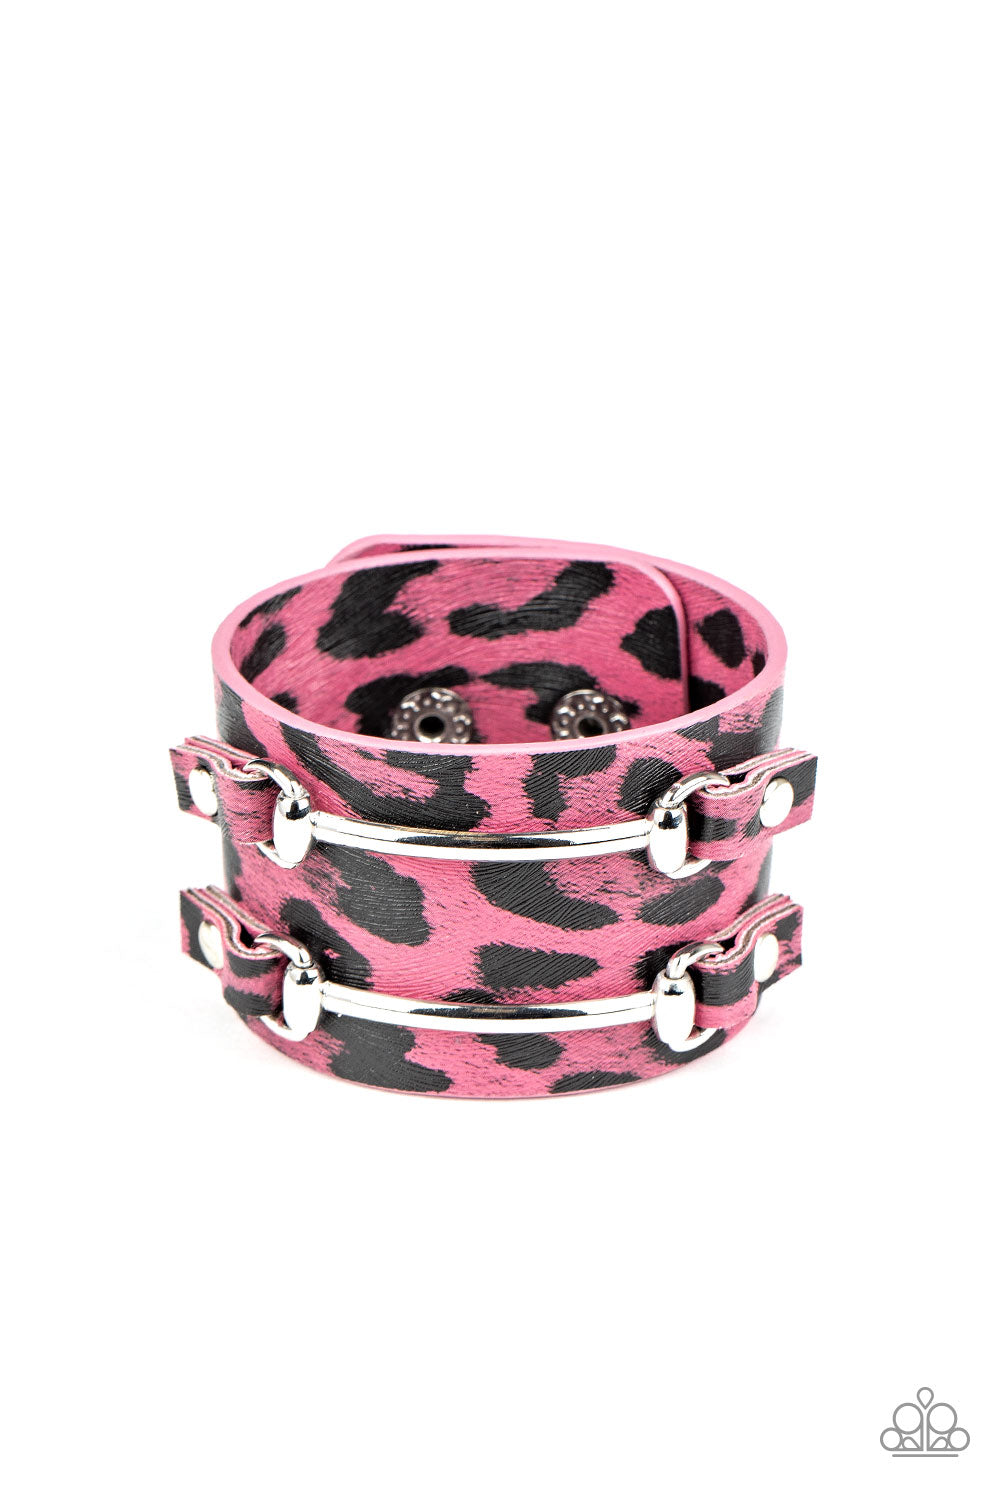 Safari Scene - Pink - Spiffy Chick Jewelry